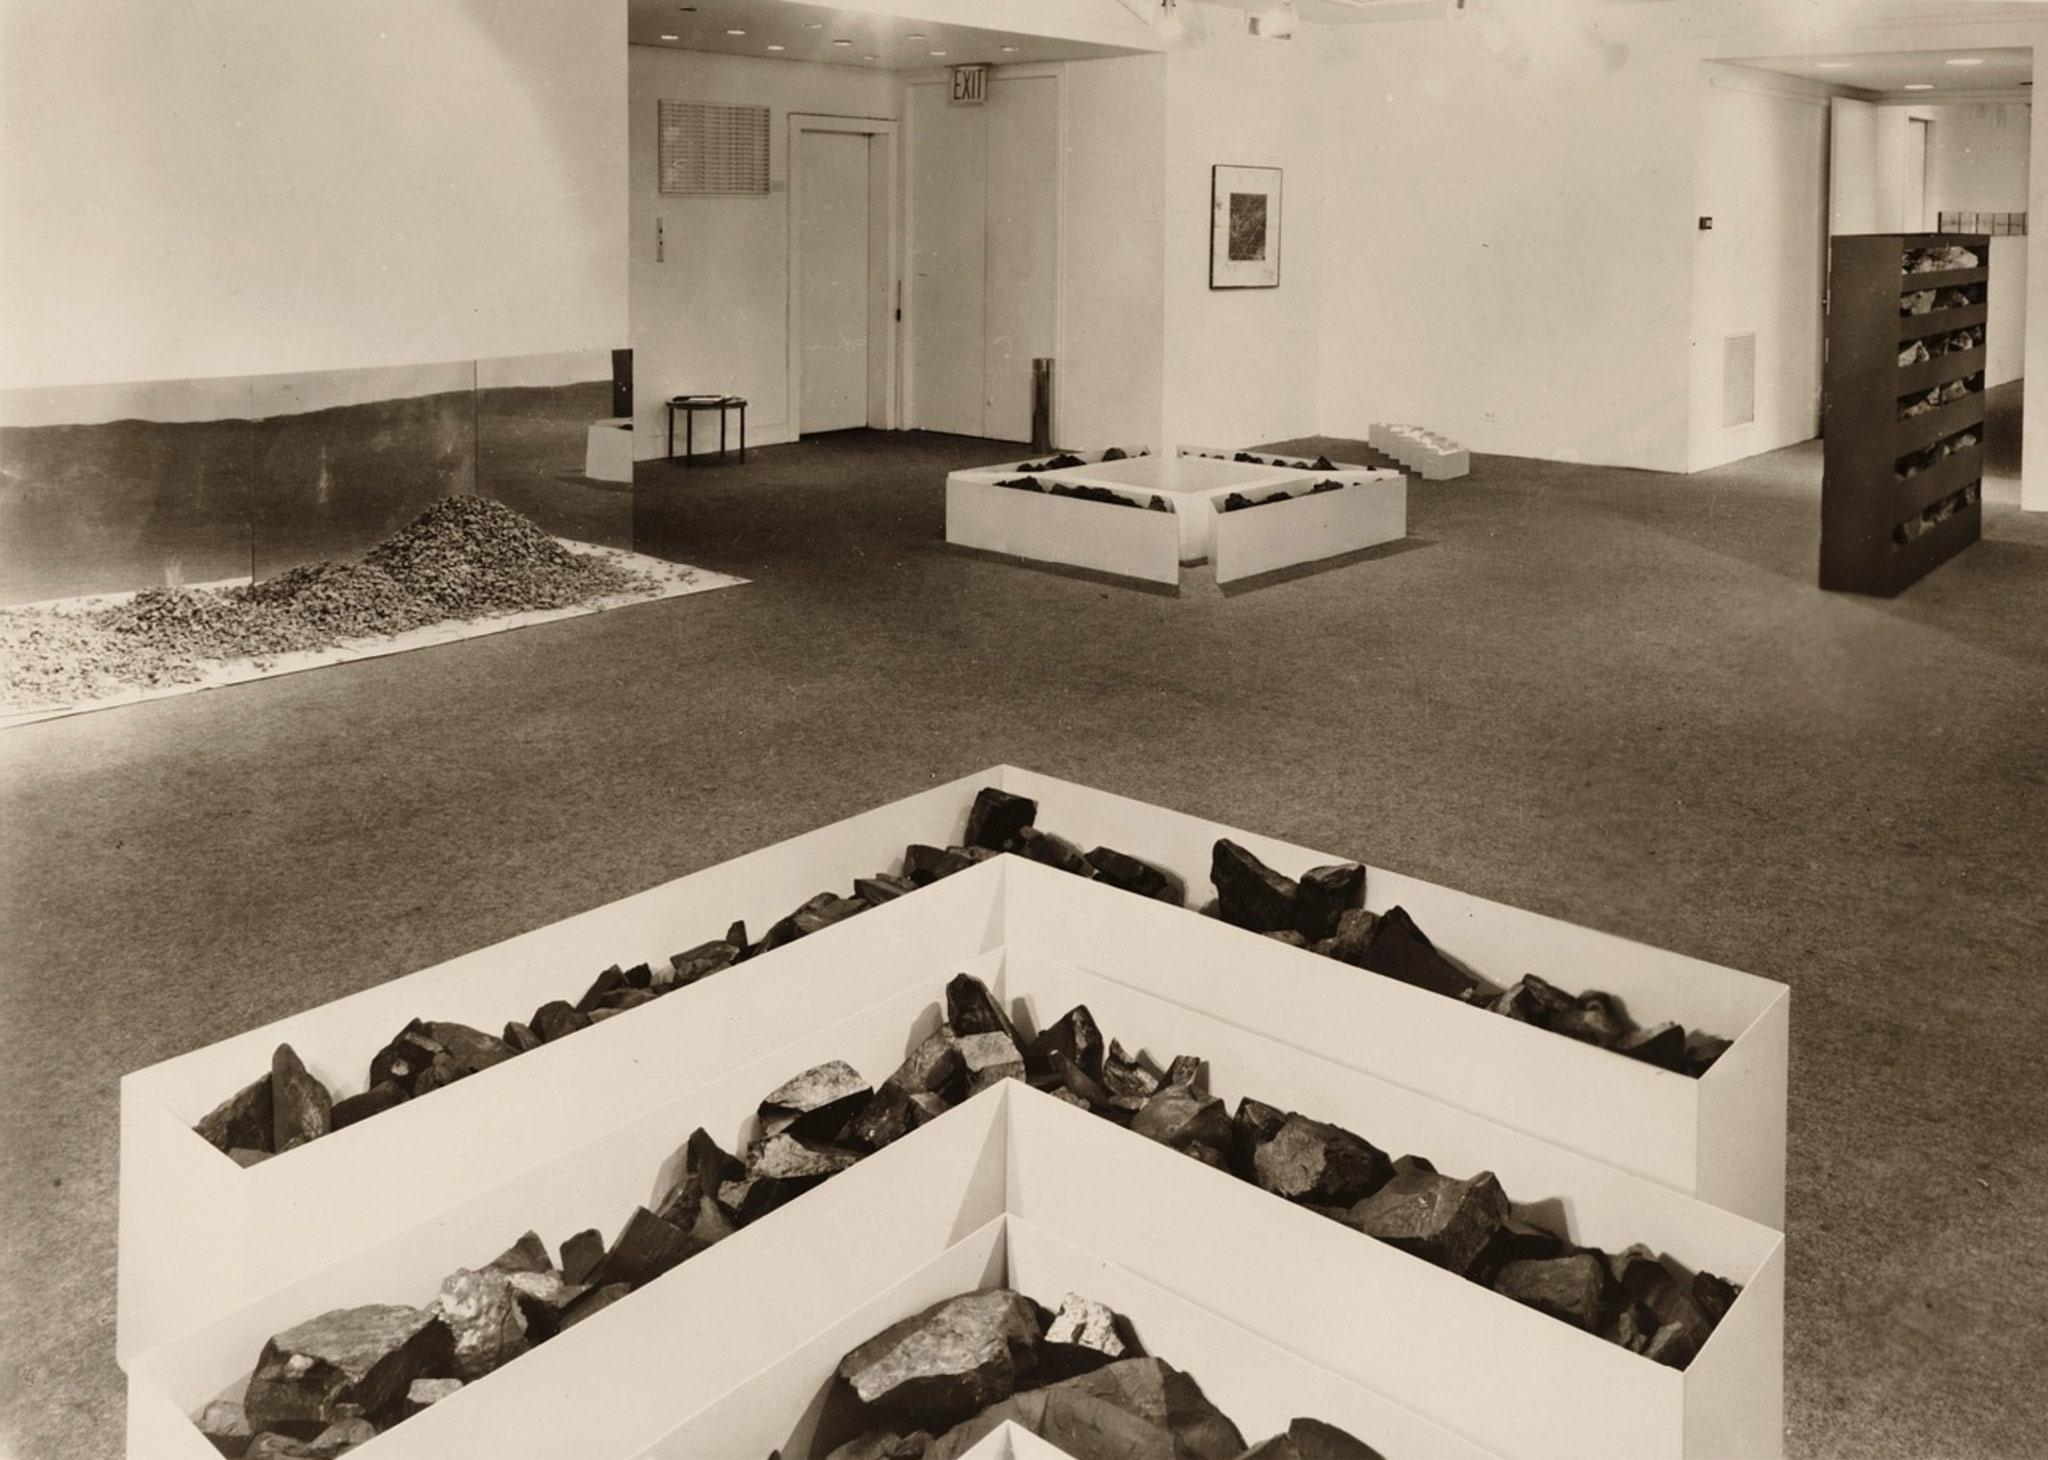 installation view of Robert Smithson sculptures